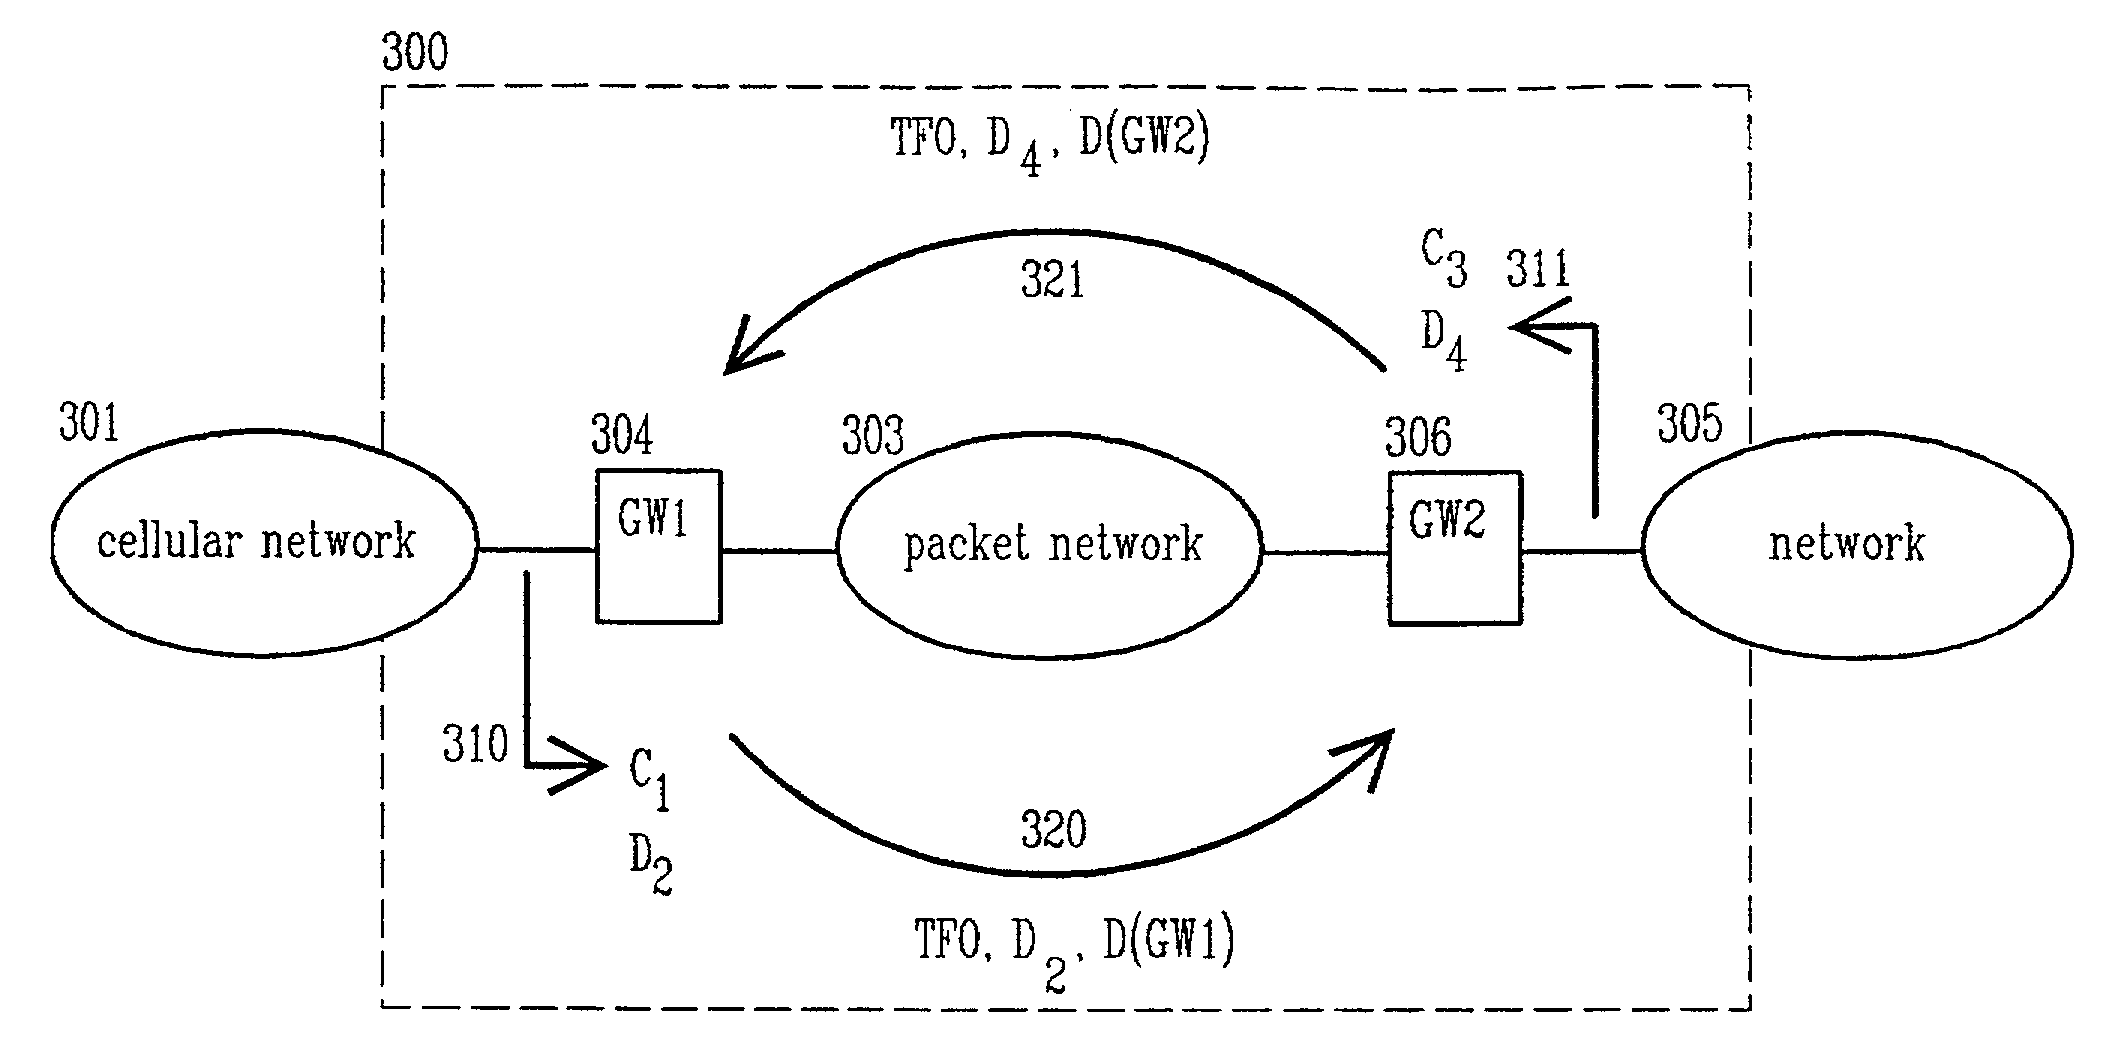 Method for transmitting coding information over packet data network